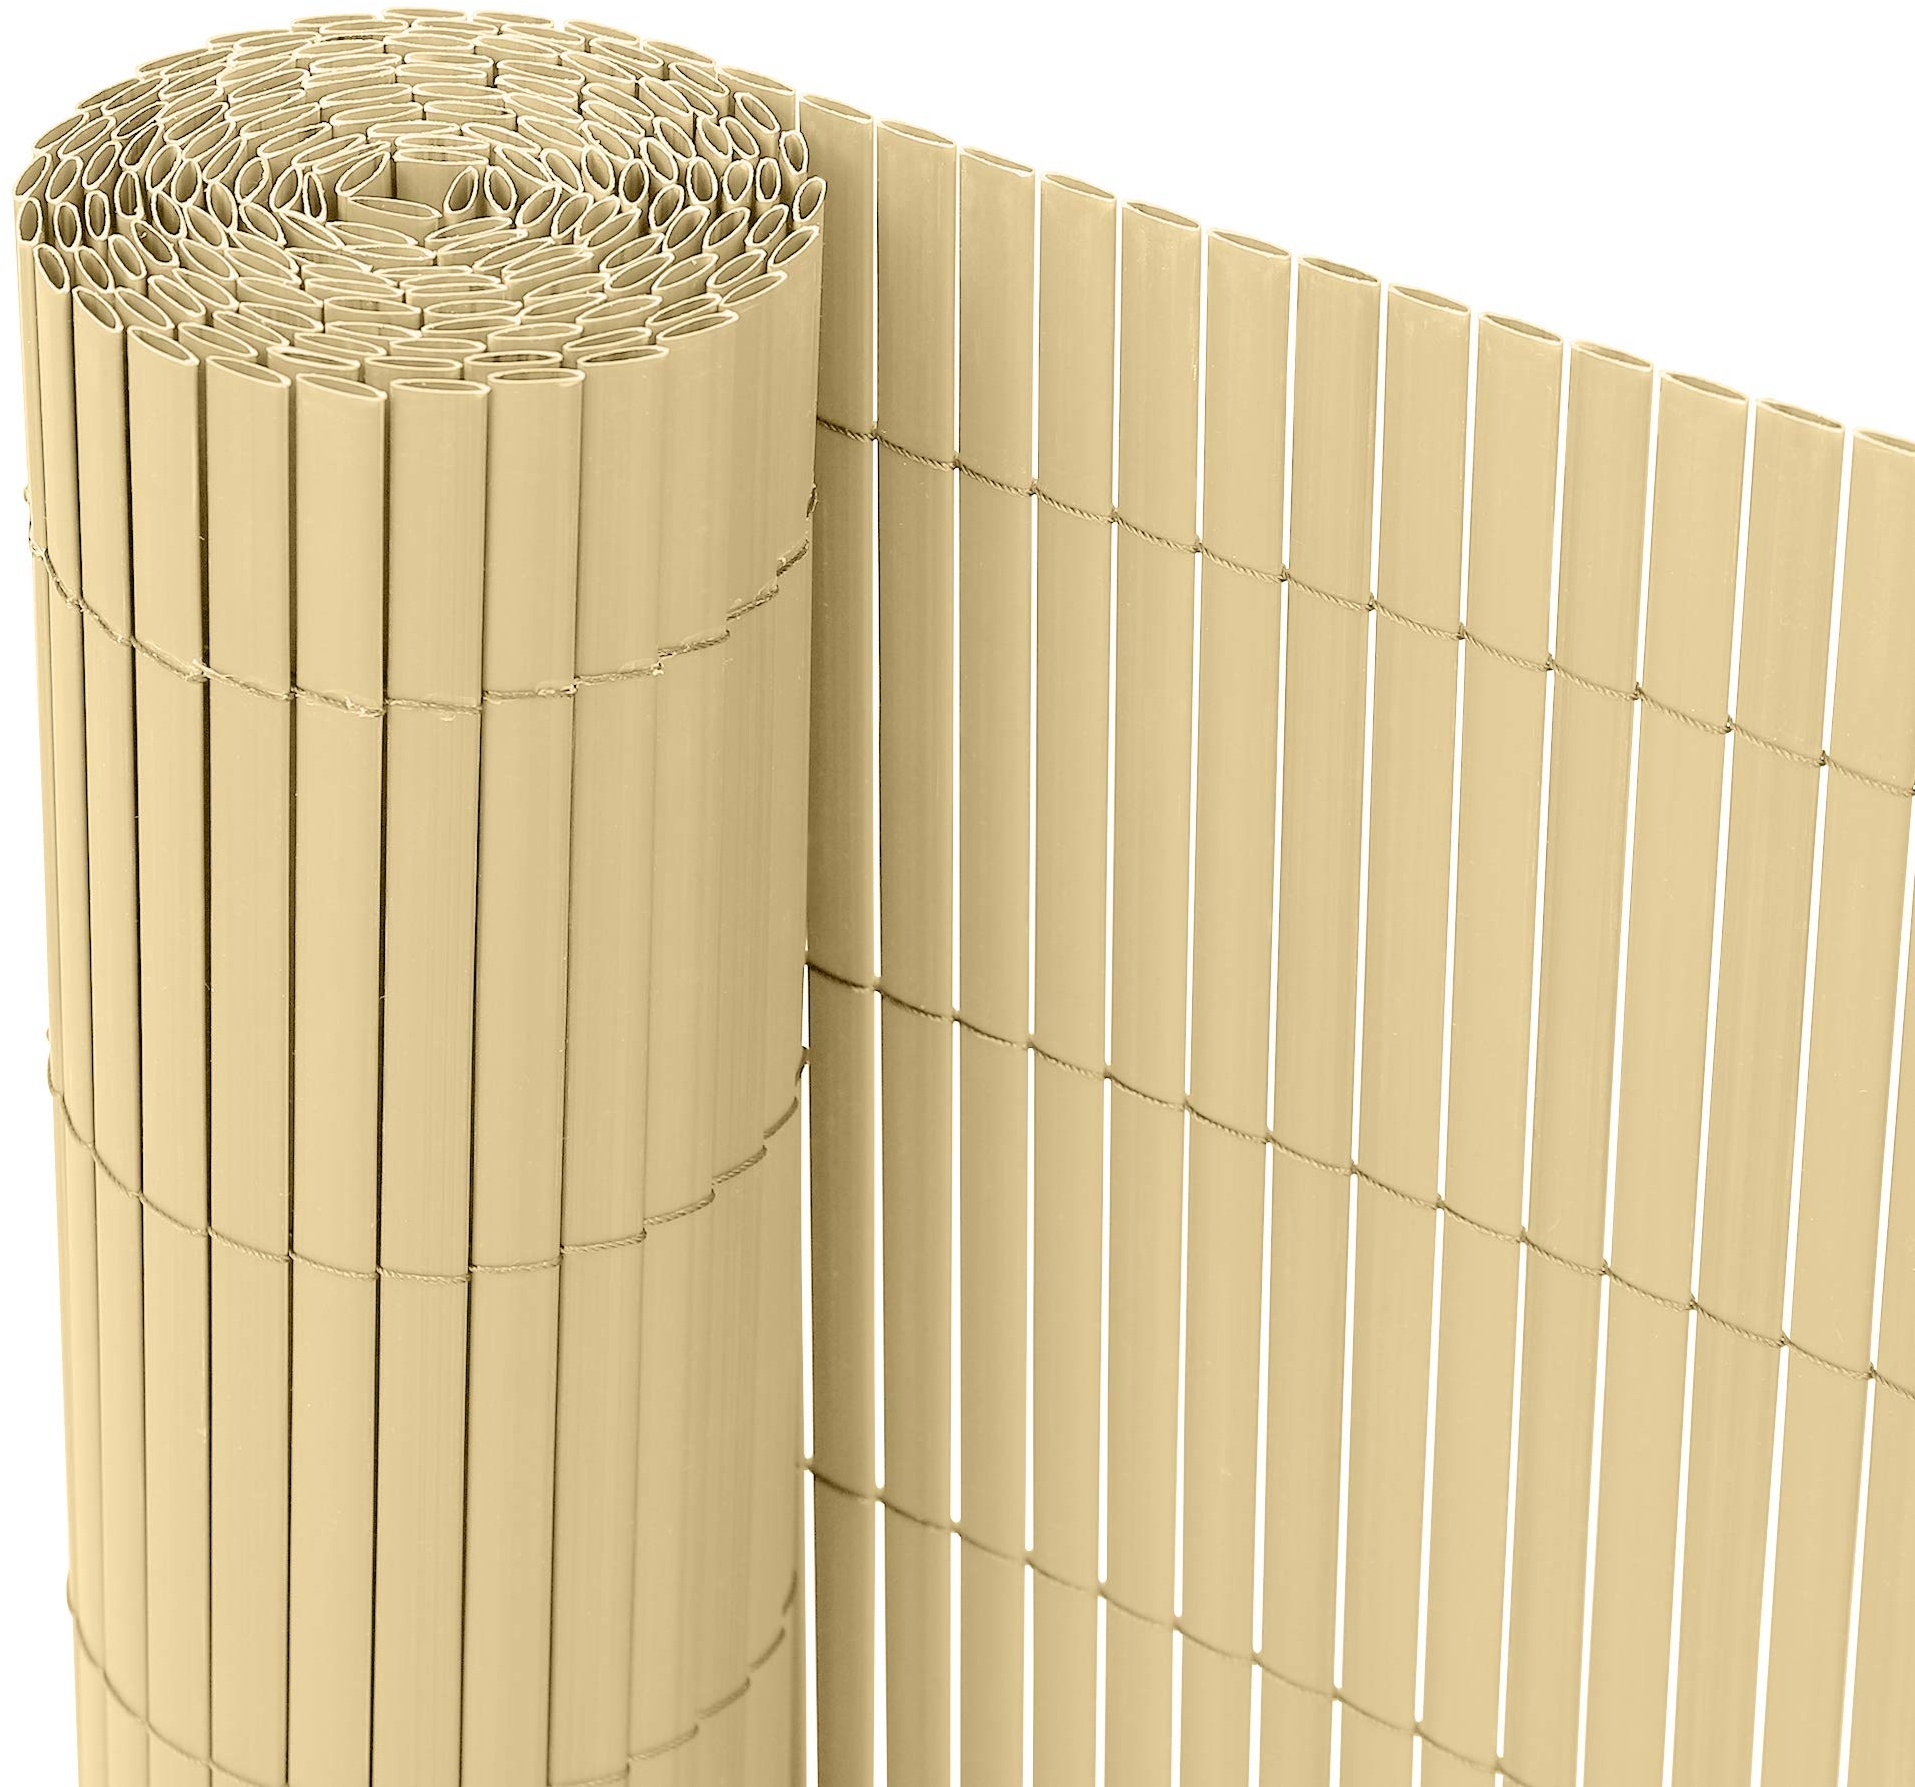 Ribelli® PVC Sichtschutzmatte Sichtschutzzaun Sichtschutz Zaun Balkon Windschutz (80 x 300 cm, Bambus)